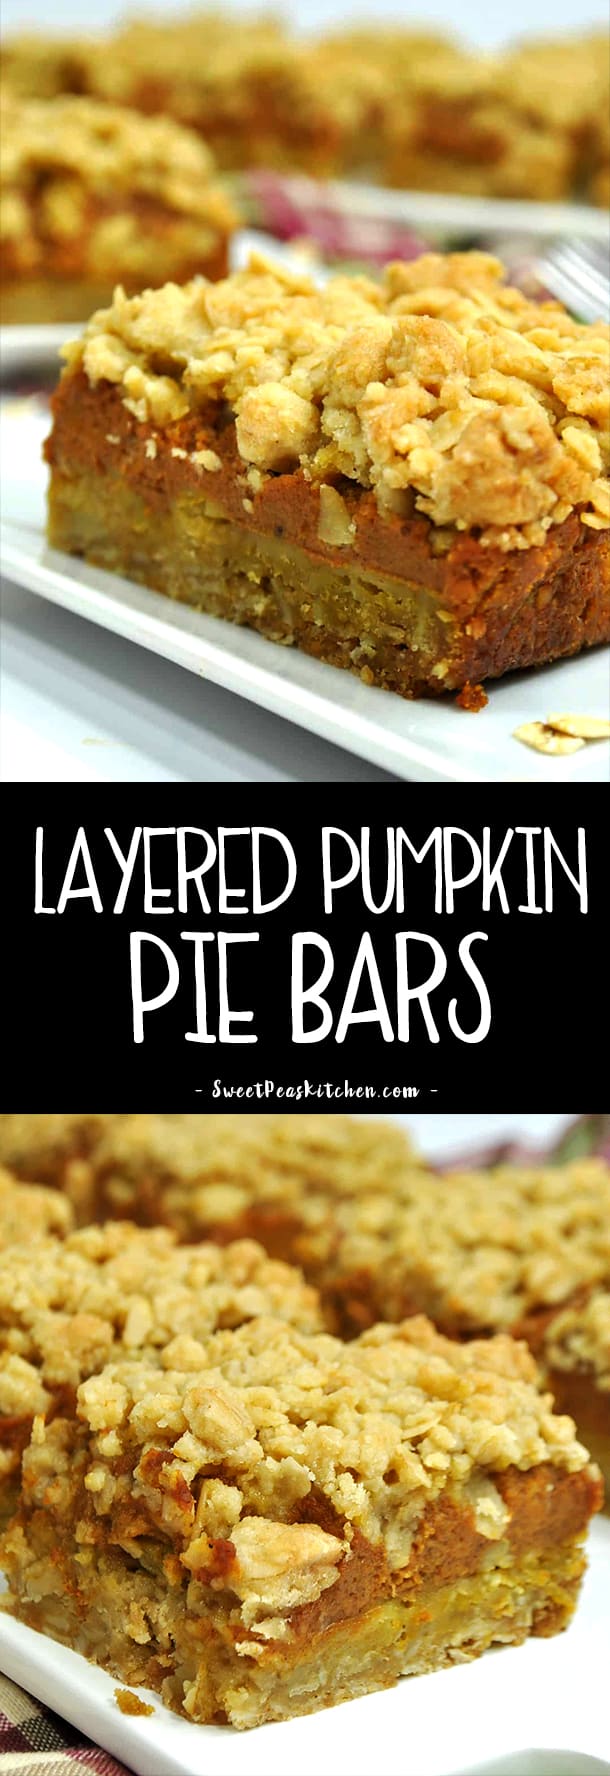 Layered Pumpkin Pie Bars Recipe